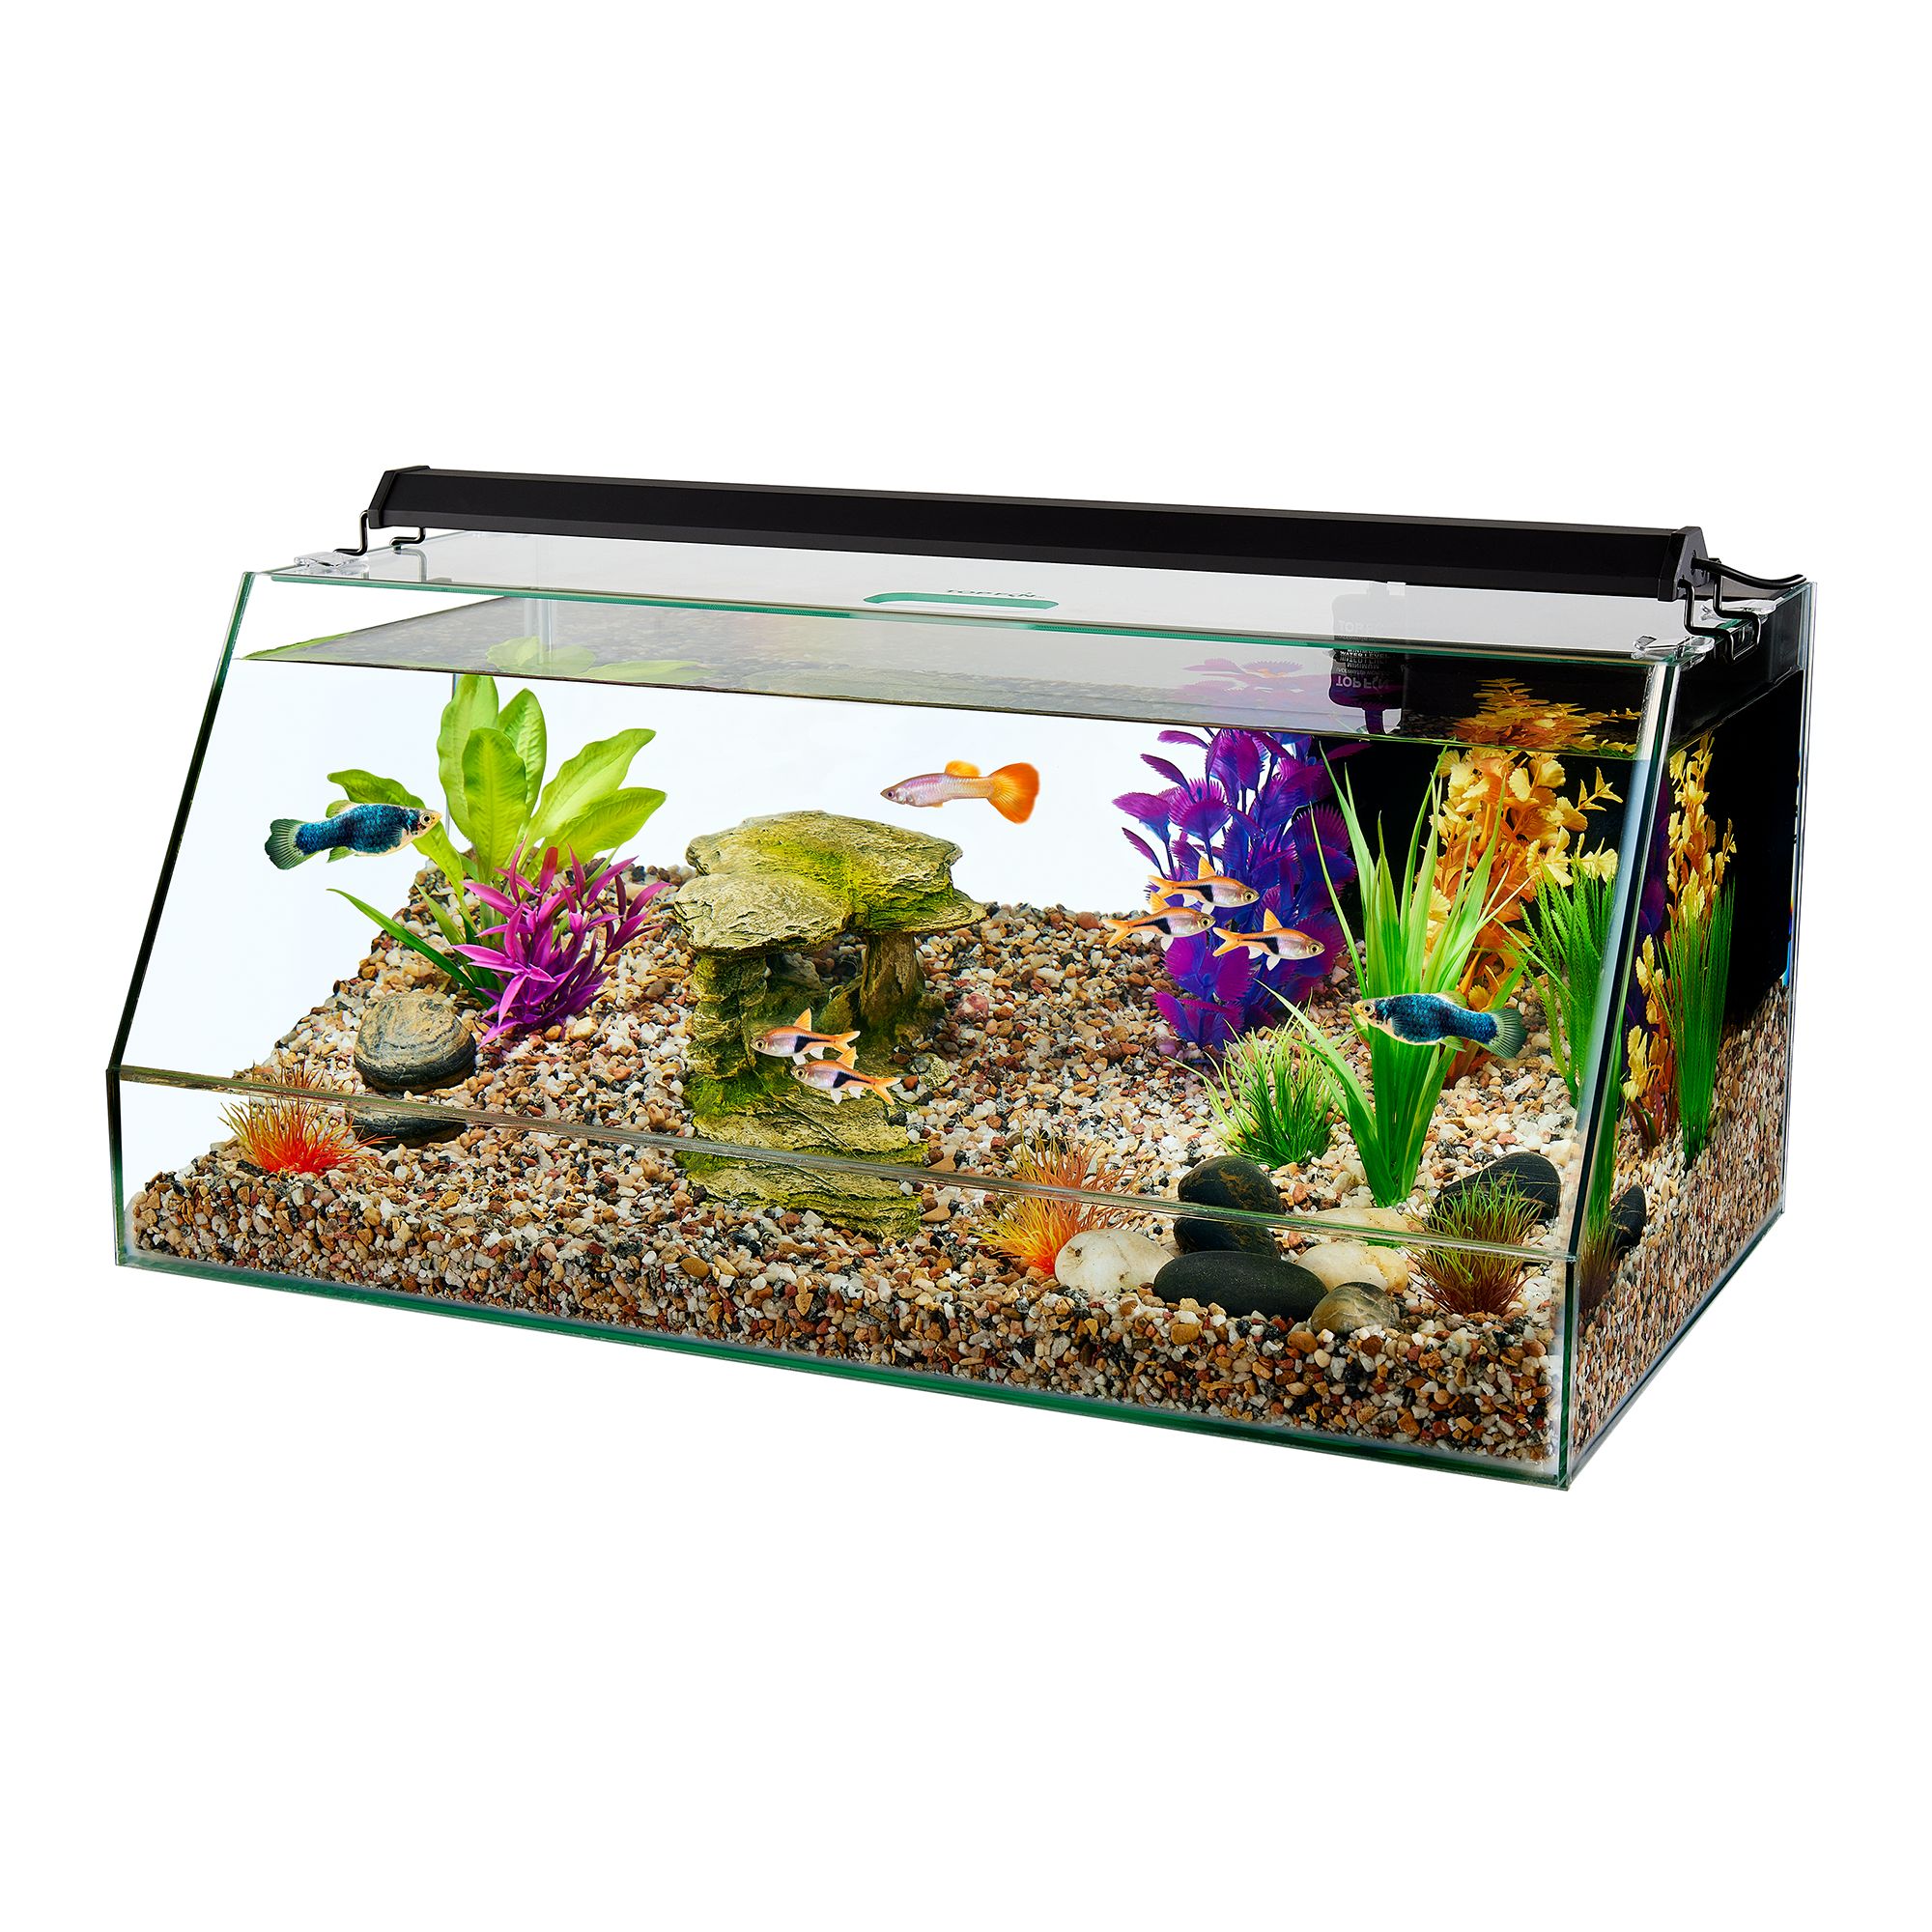 40 gallon aquarium - Google Search